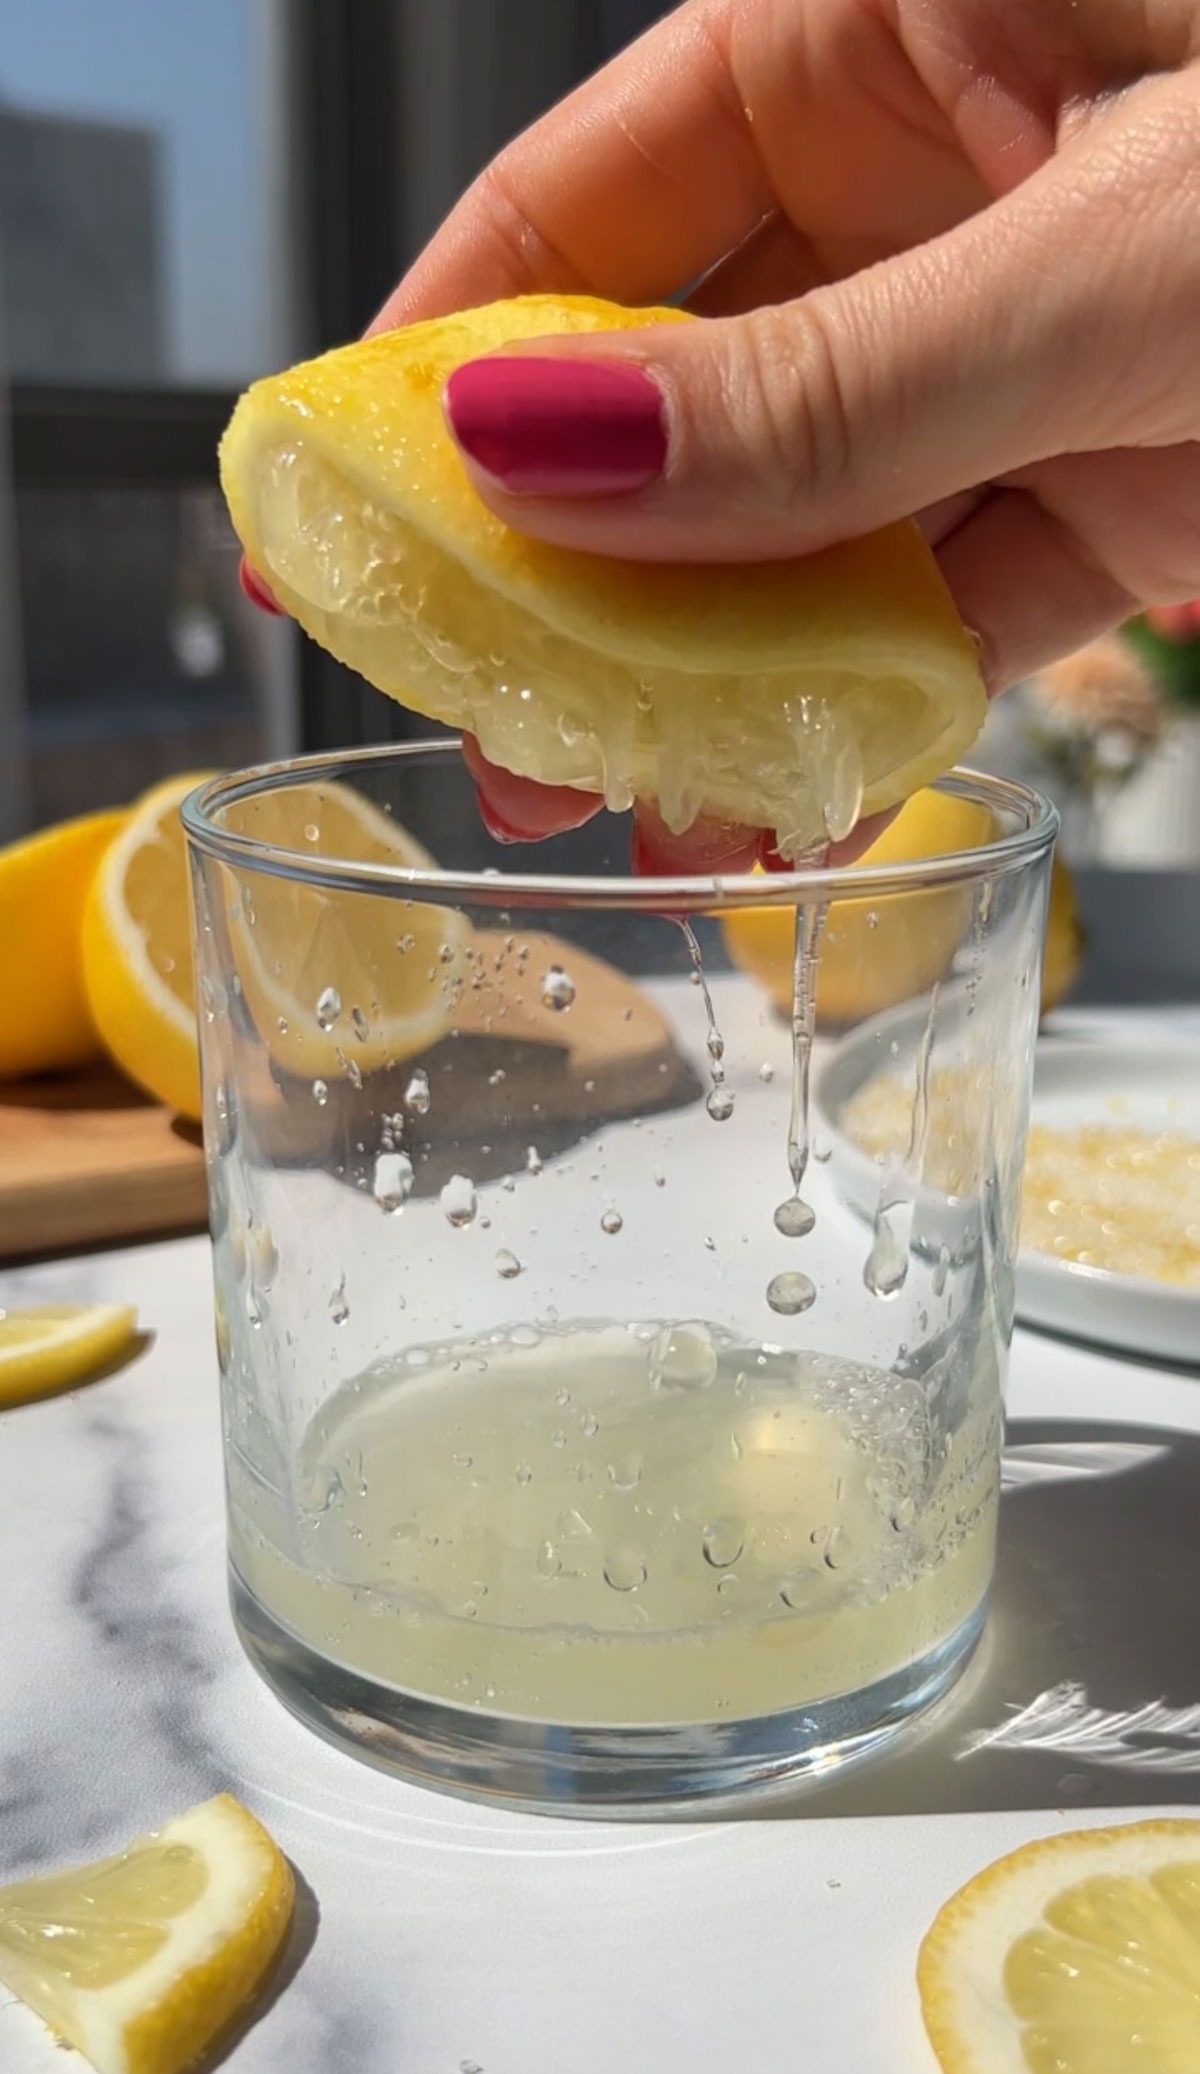 Squeezing lemon juice into a glass.